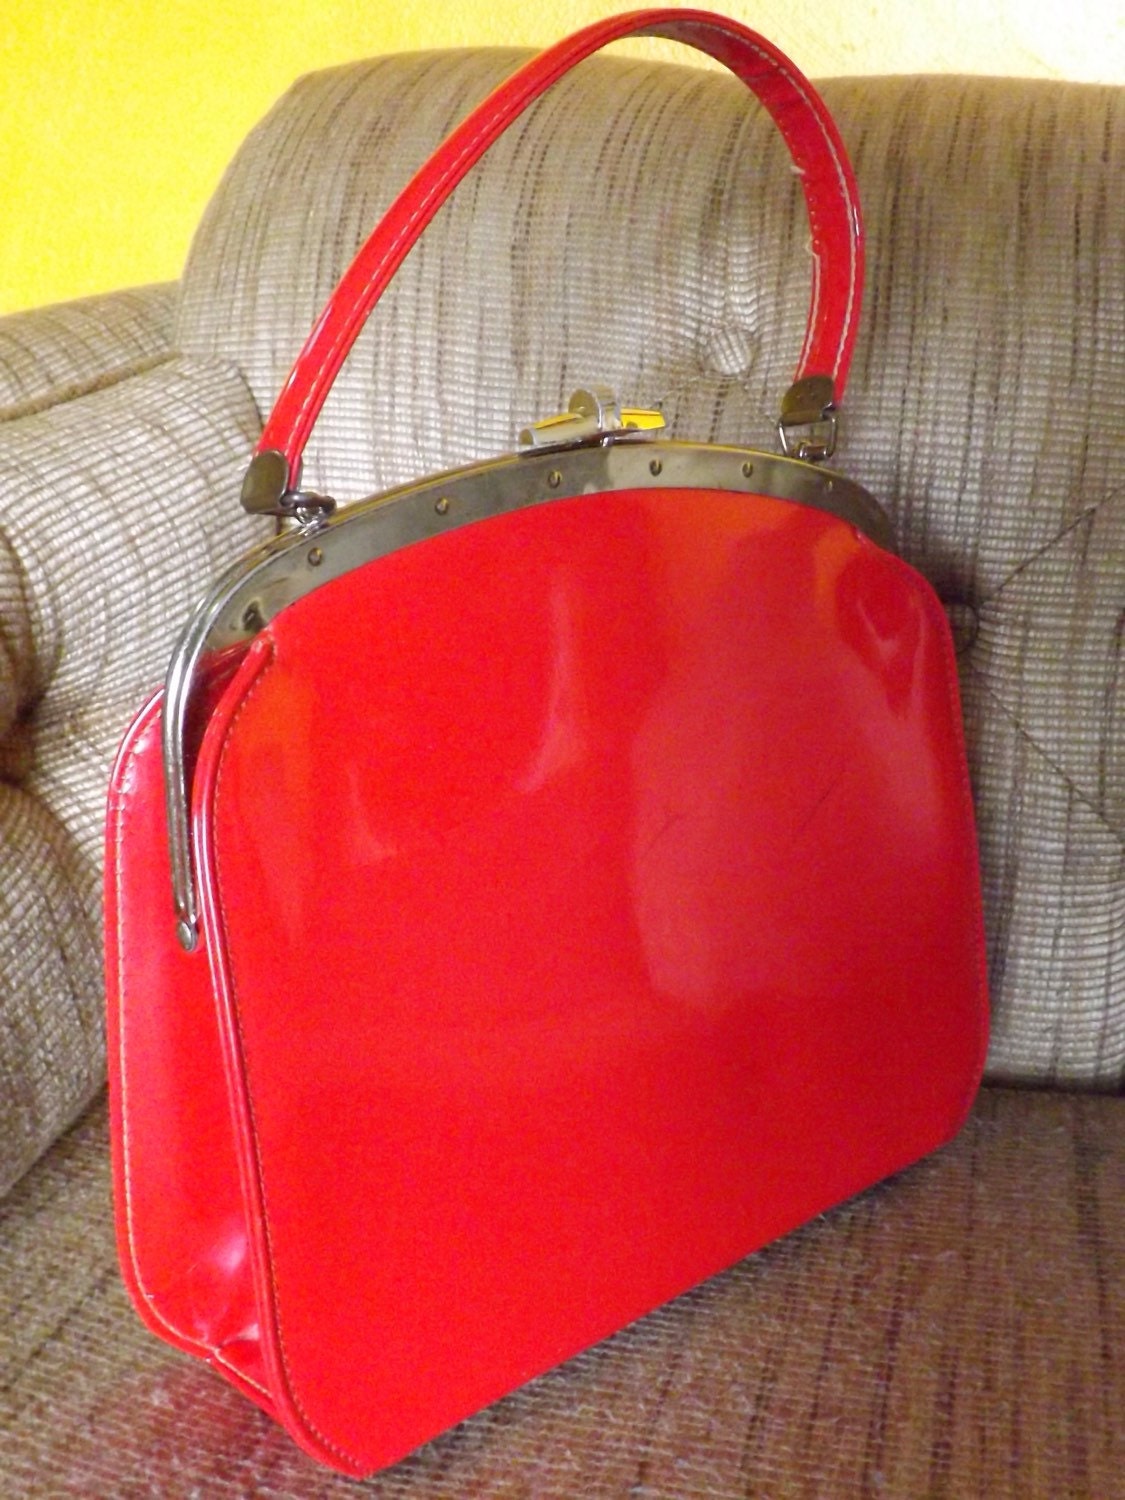 1960s Dubette red patent leather purse